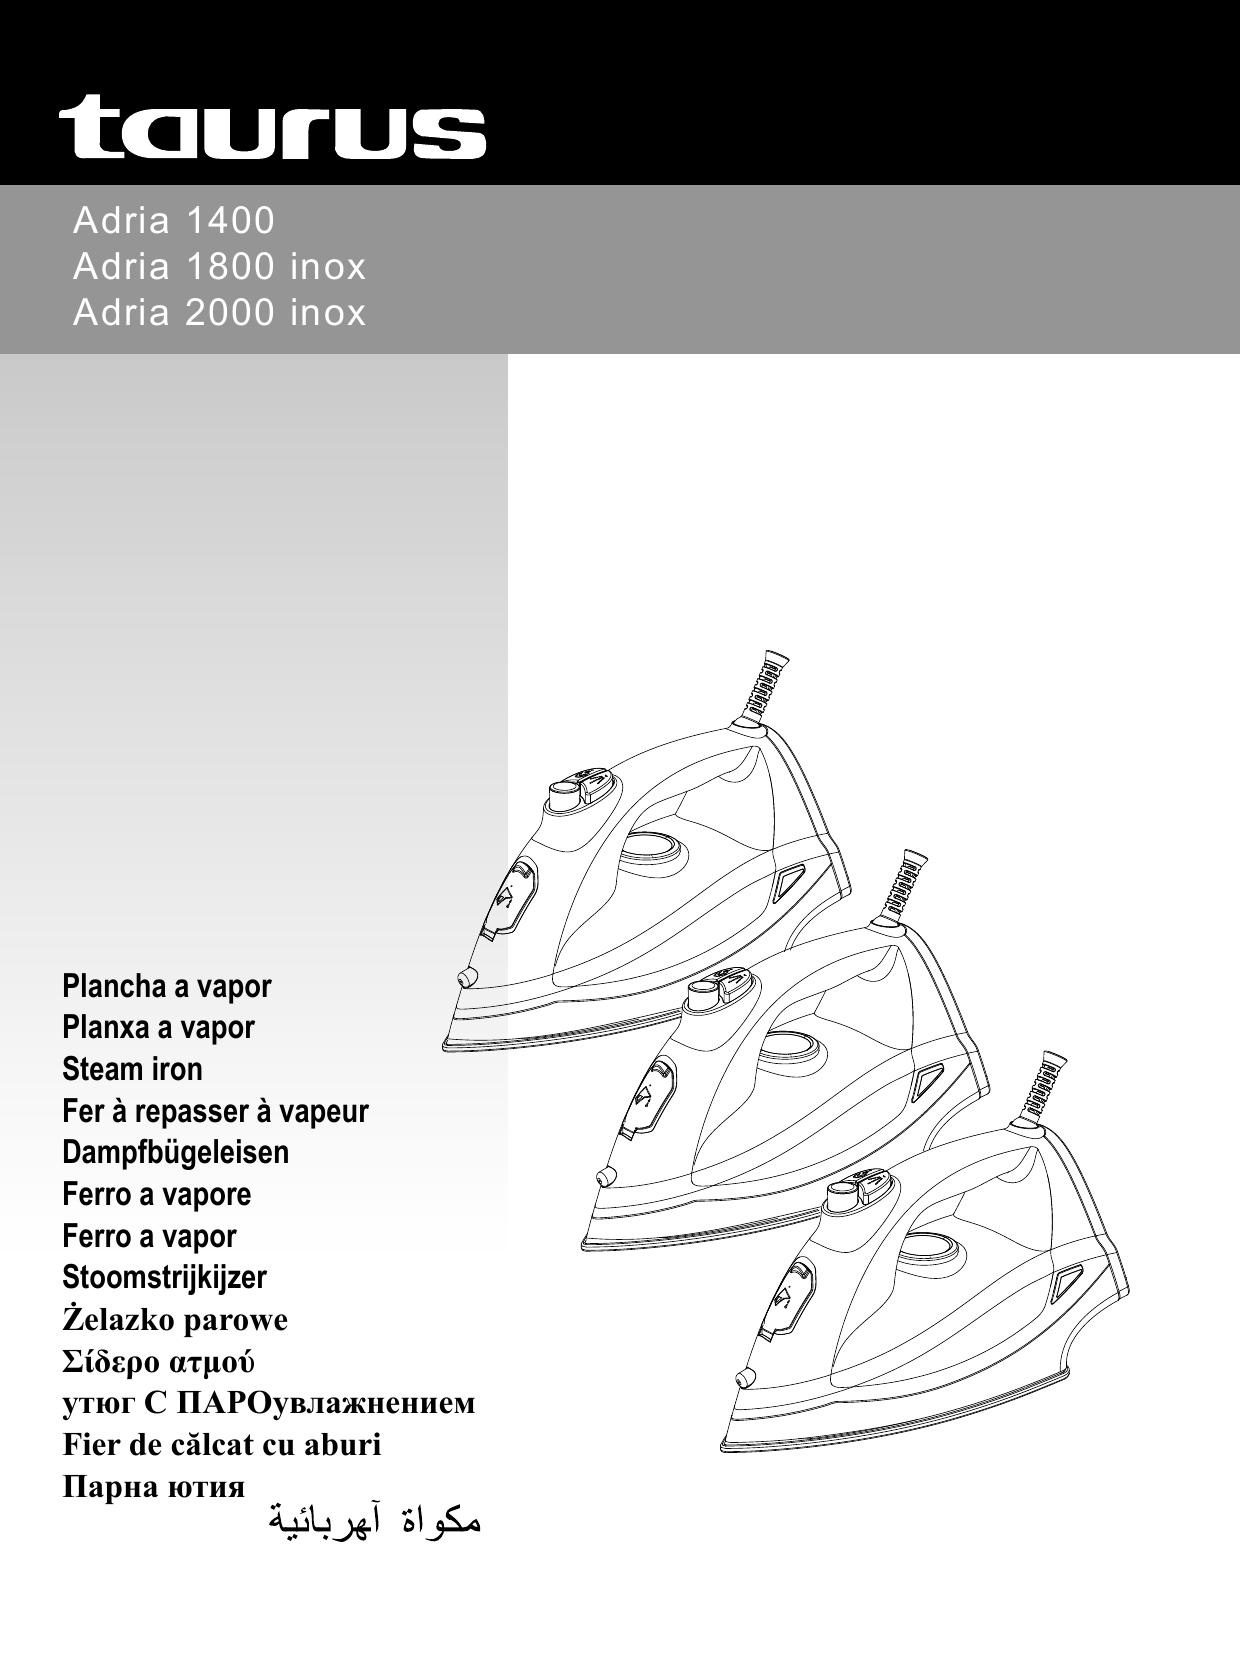 Taurus Group Adria 1800 inox Iron User Manual